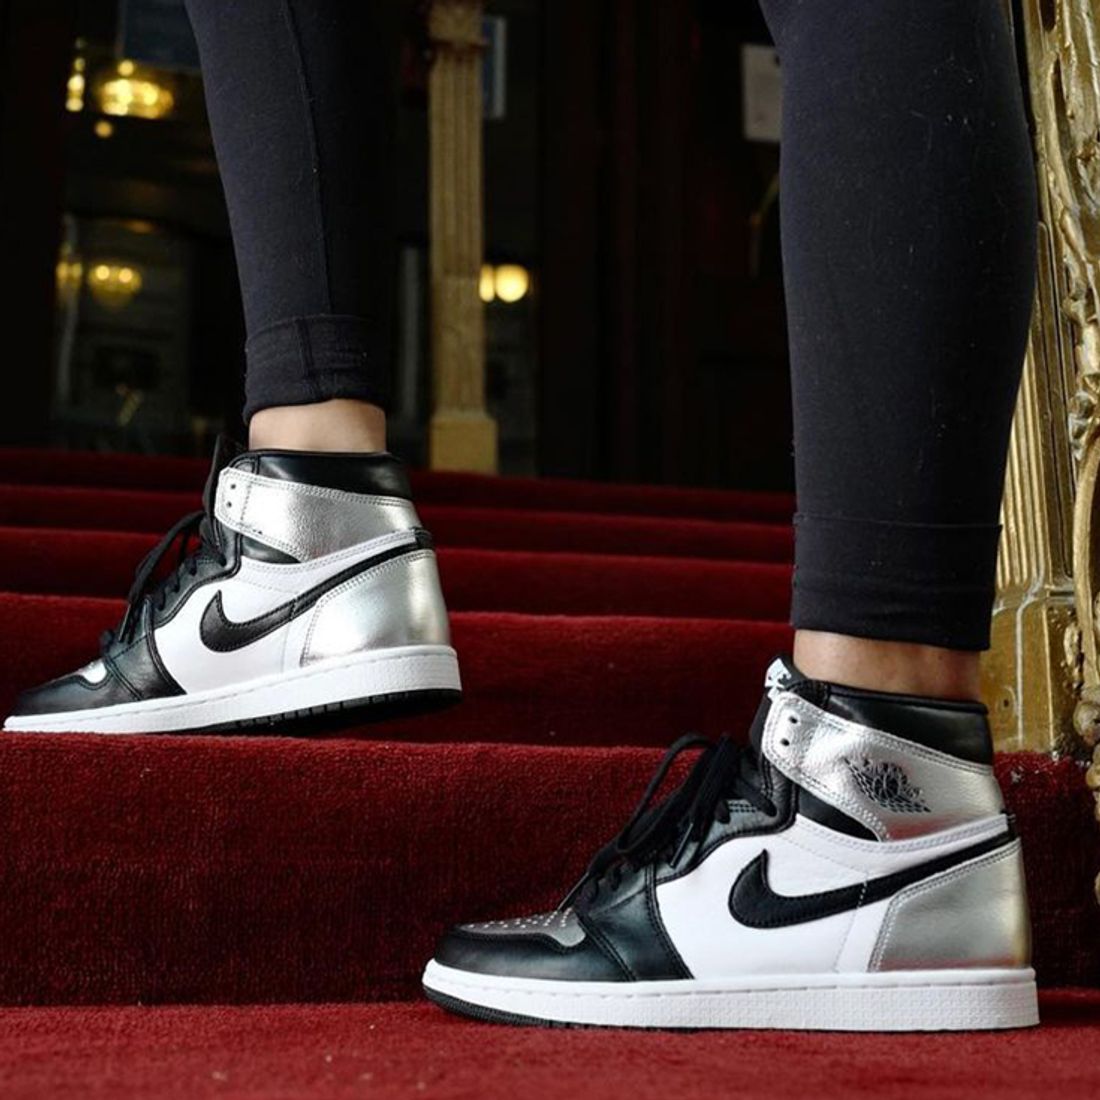 Where to Buy the Air Jordan 1 'Silver Toe' - Sneaker Freaker